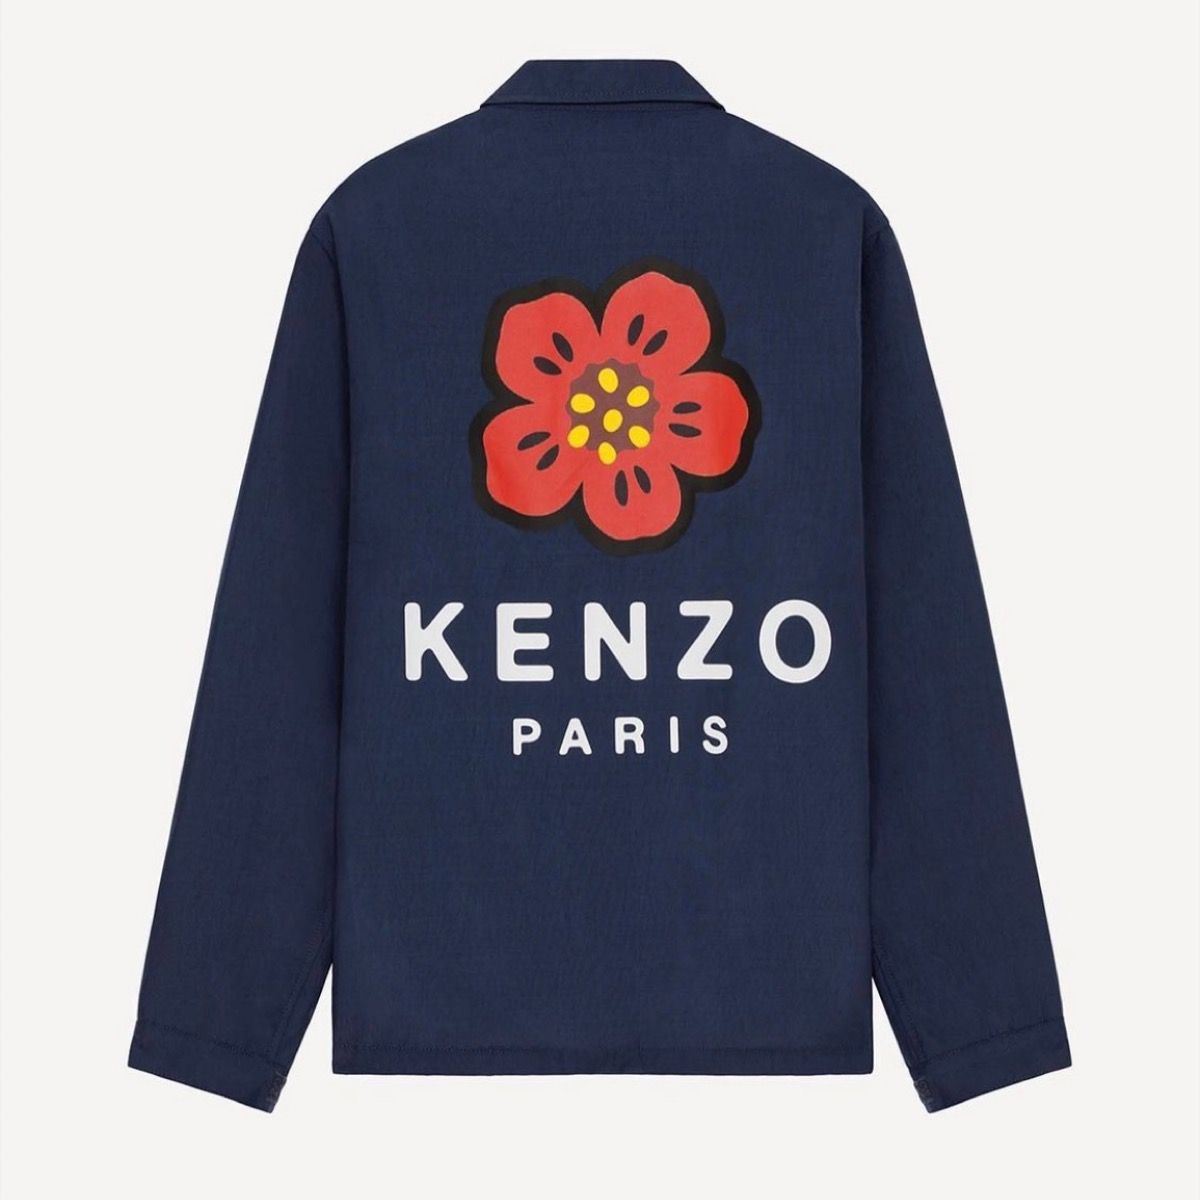 KENZO Boke Flower Collection by NIGO®︎が国内2月5日より発売予定